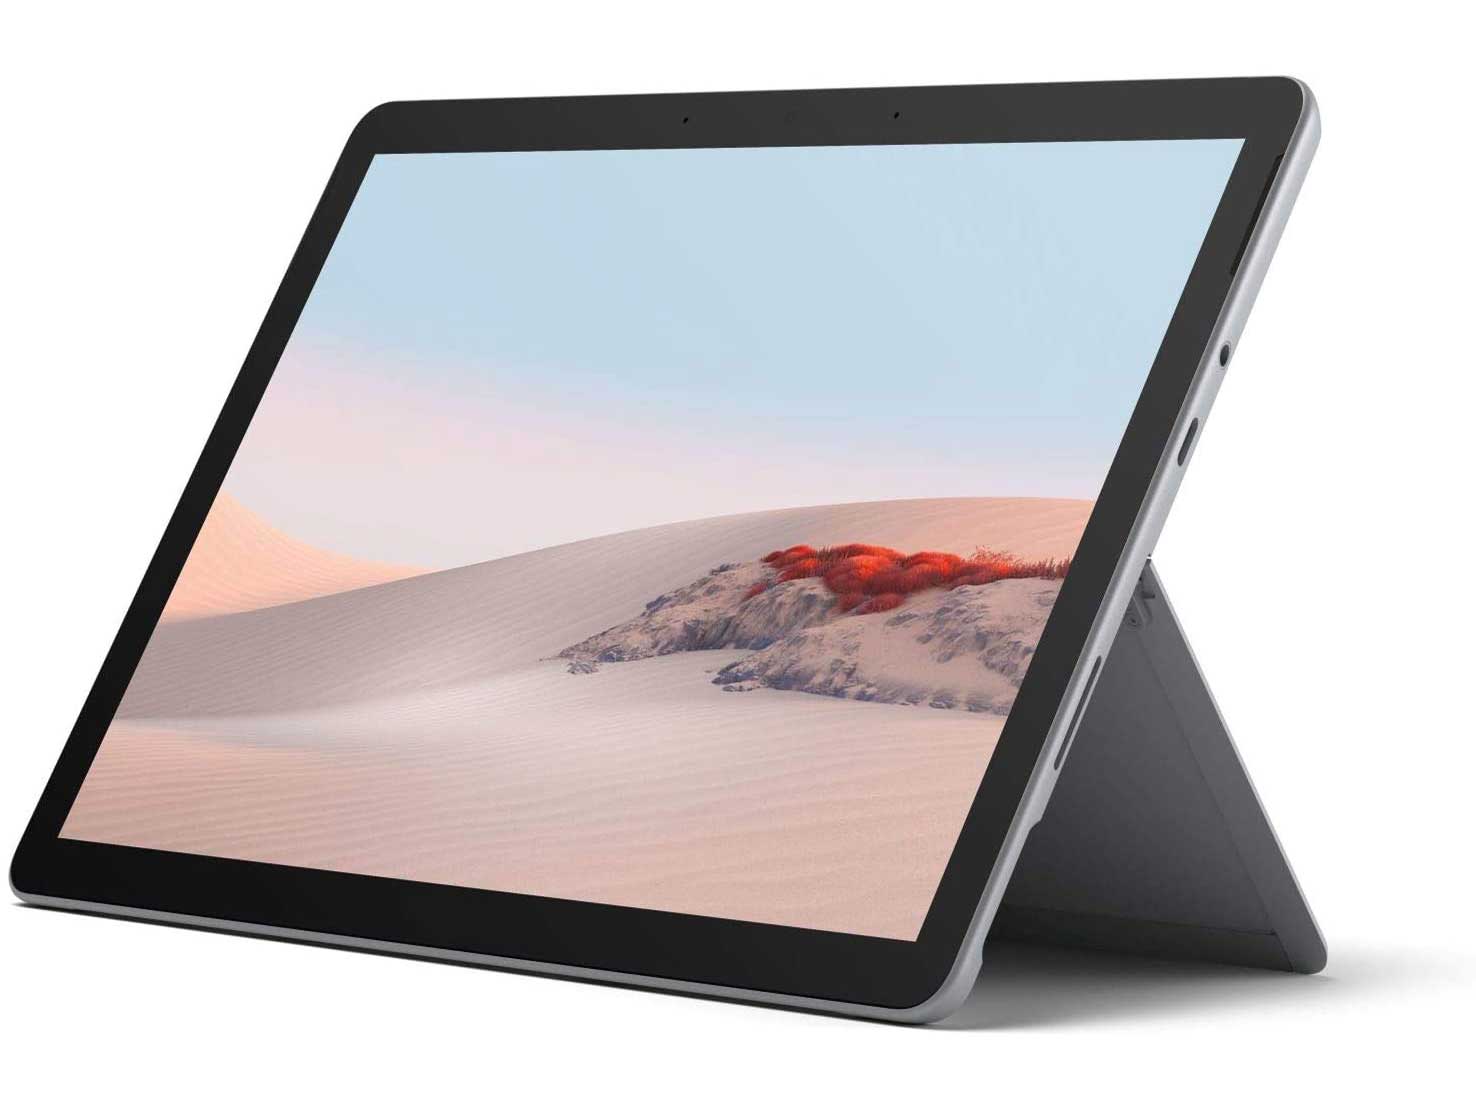 Microsoft Surface GO 2 10 Inch Tablet PC - (Silver) (Intel Pentium Gold Processor 4425Y, 4 GB RAM, 64 GB eMMC, Windows 10 Home in S Mode, 2020 Model)